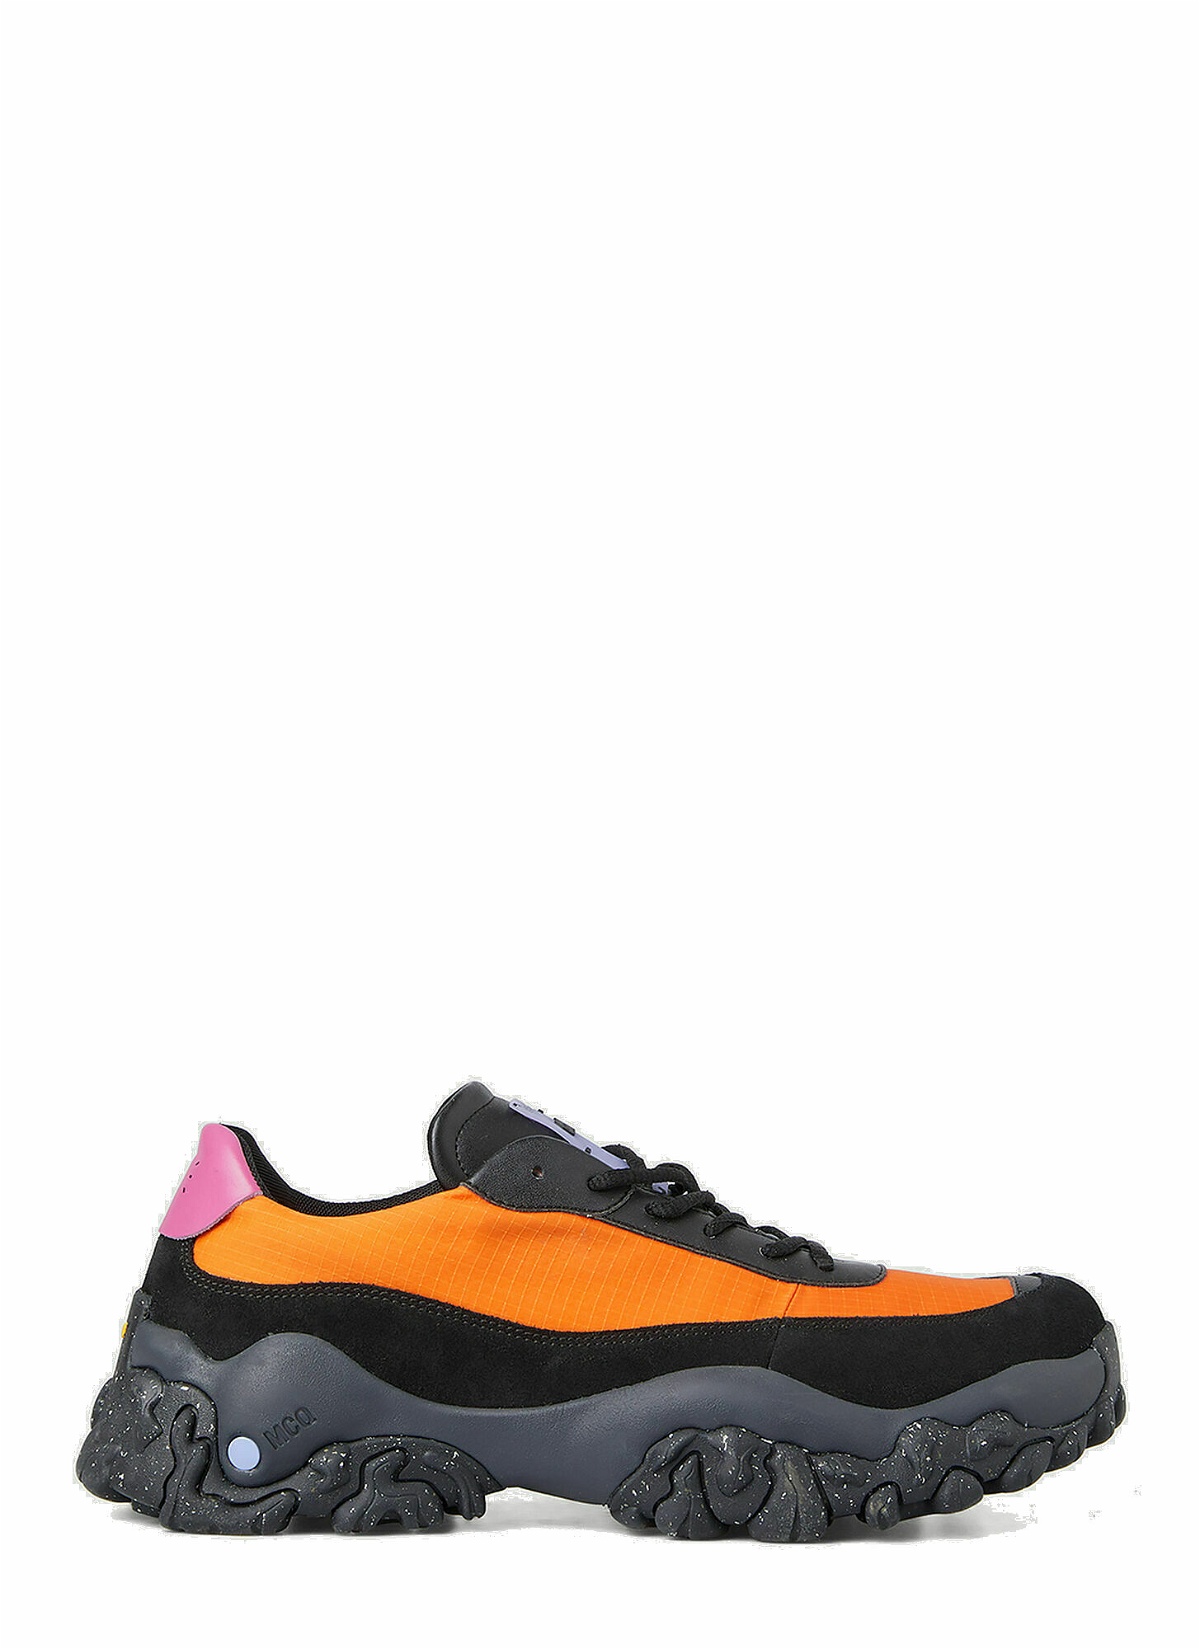 L11 Crimp Sneakers in Black McQ Alexander McQueen